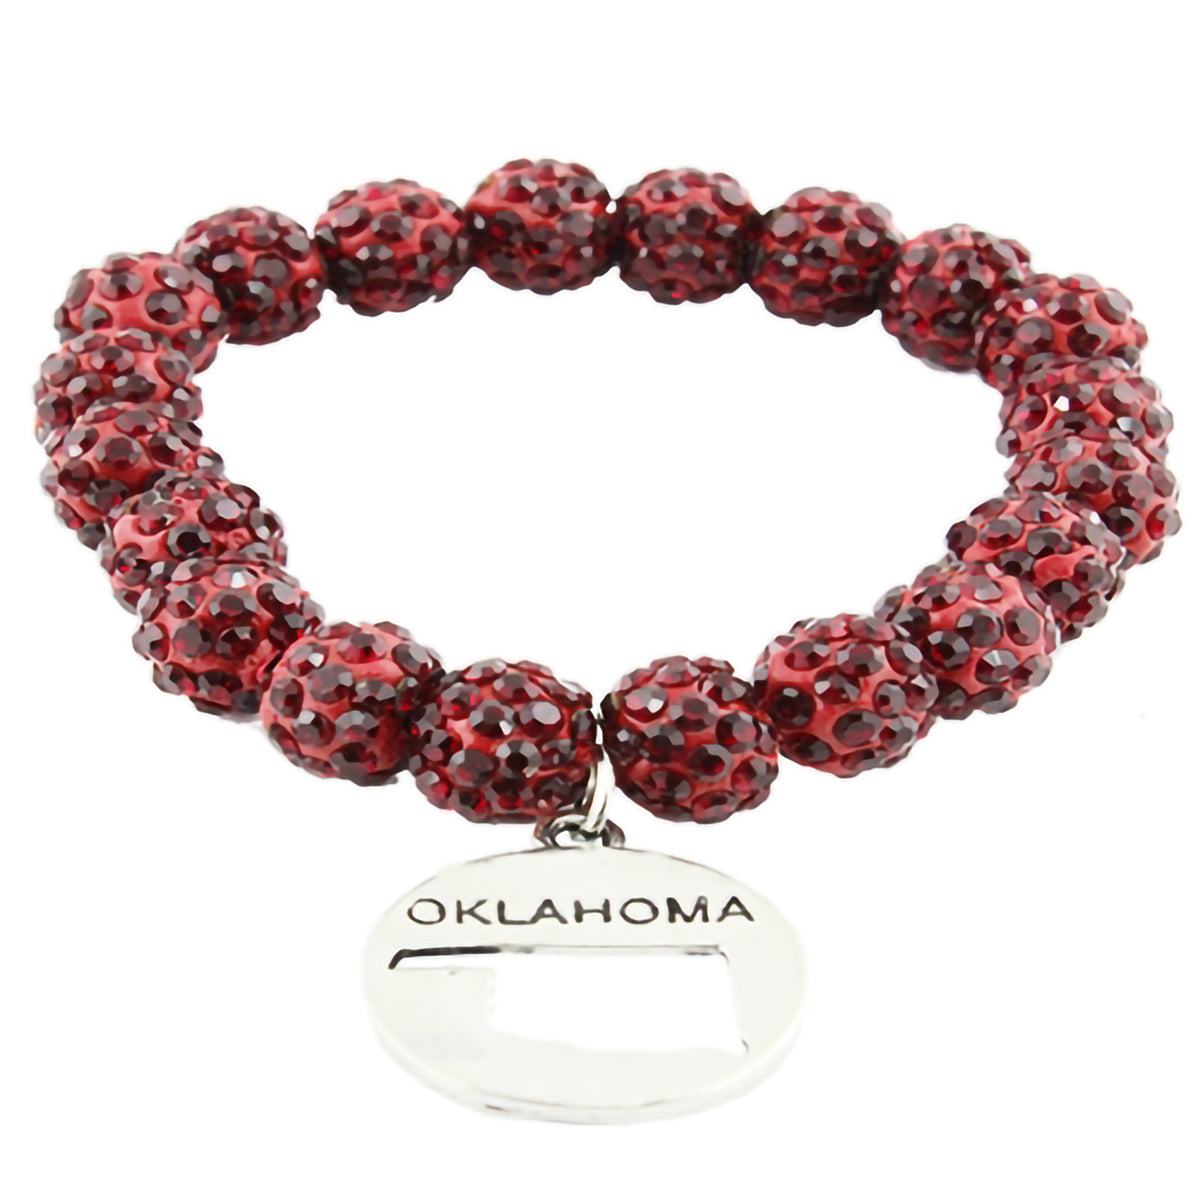 74350 - Crystal Stretch Bracelet with Oklahoma State Shape - Burgundy- Fashion Jewelry Wholesale